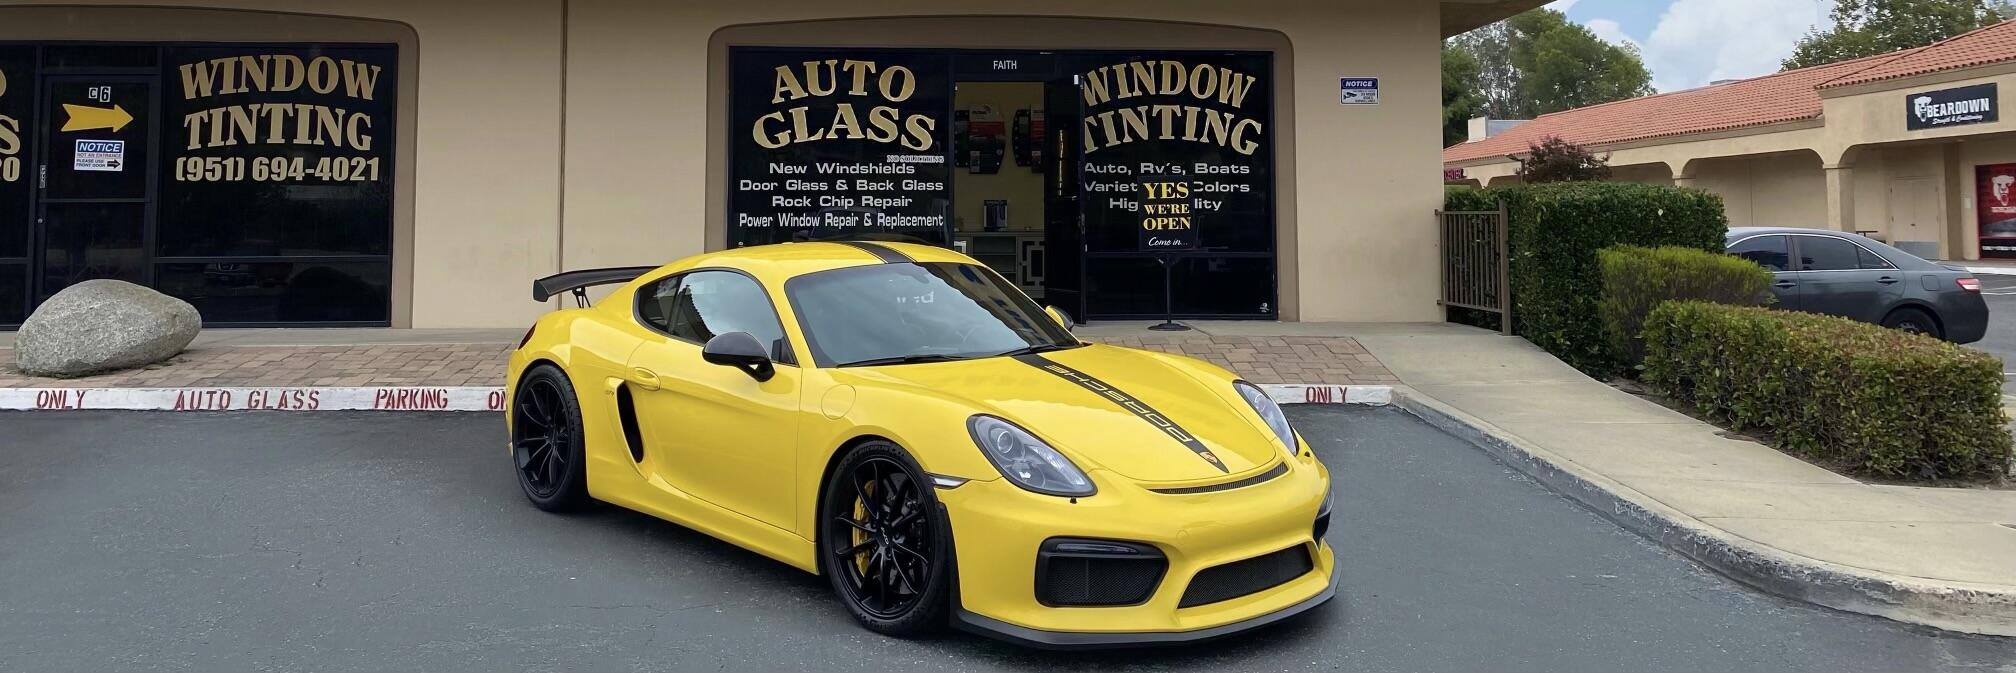 Auto Glass Repair & Car Window Replacement in Temecula, CA Near Murrieta &  Menifee